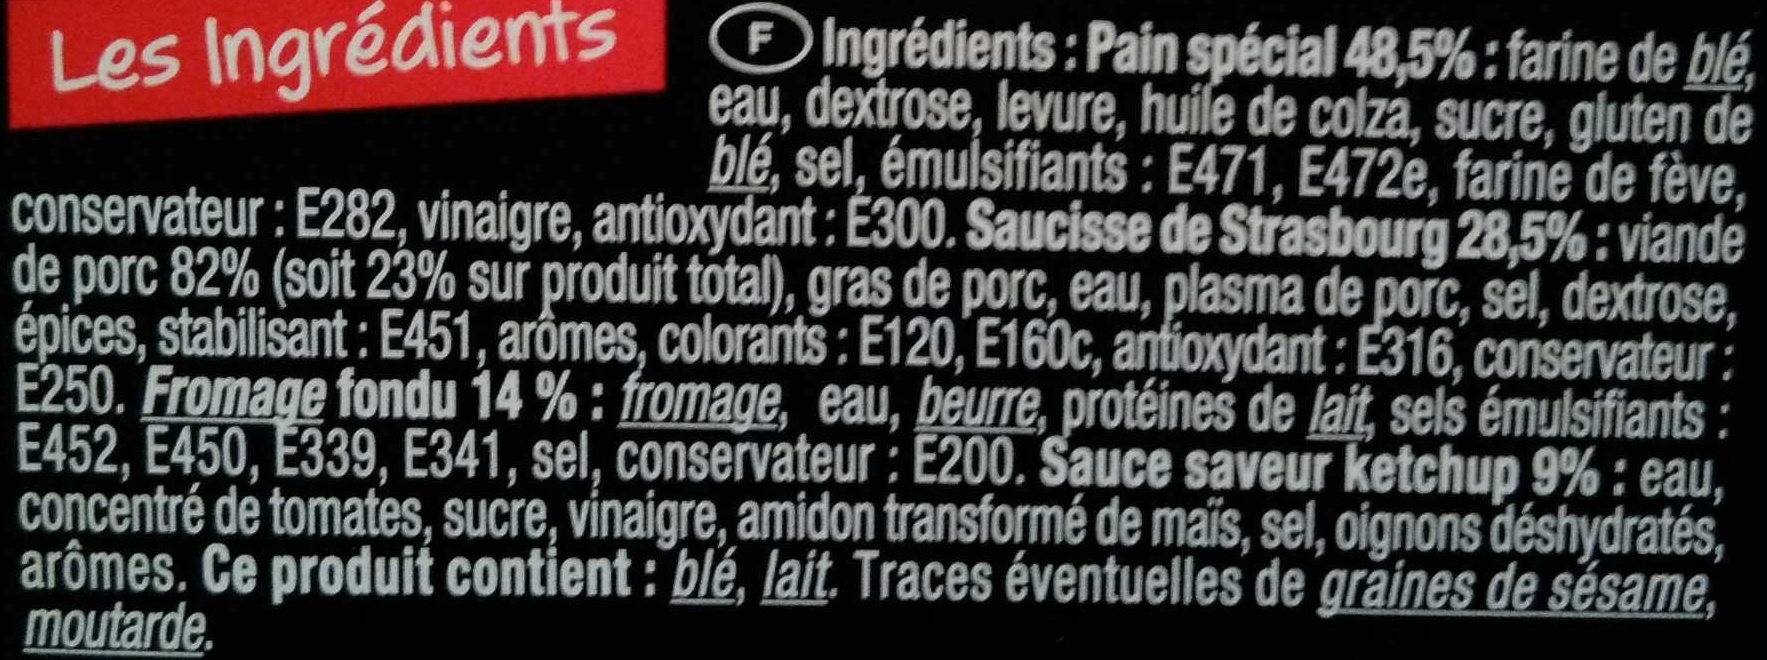 Hot dog ketchup - Ingredients - fr